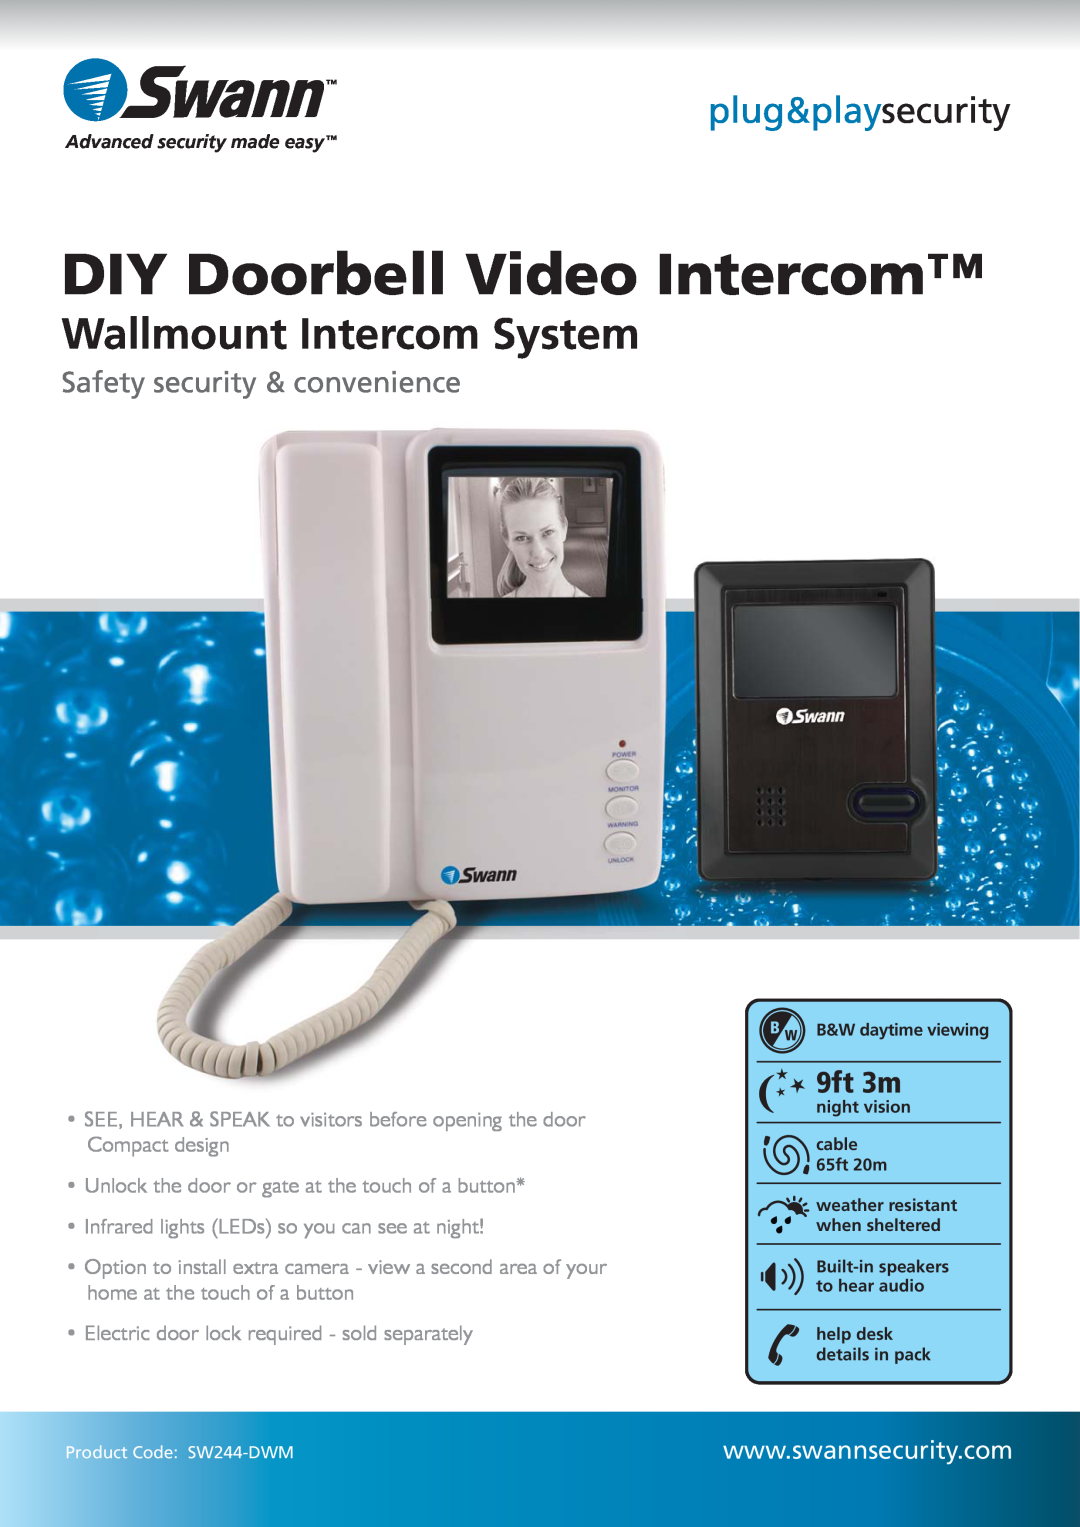 Swann SW244-DWM manual DIY Doorbell Video Intercom, Wallmount Intercom System, plug&playsecurity, 9ft 3m 